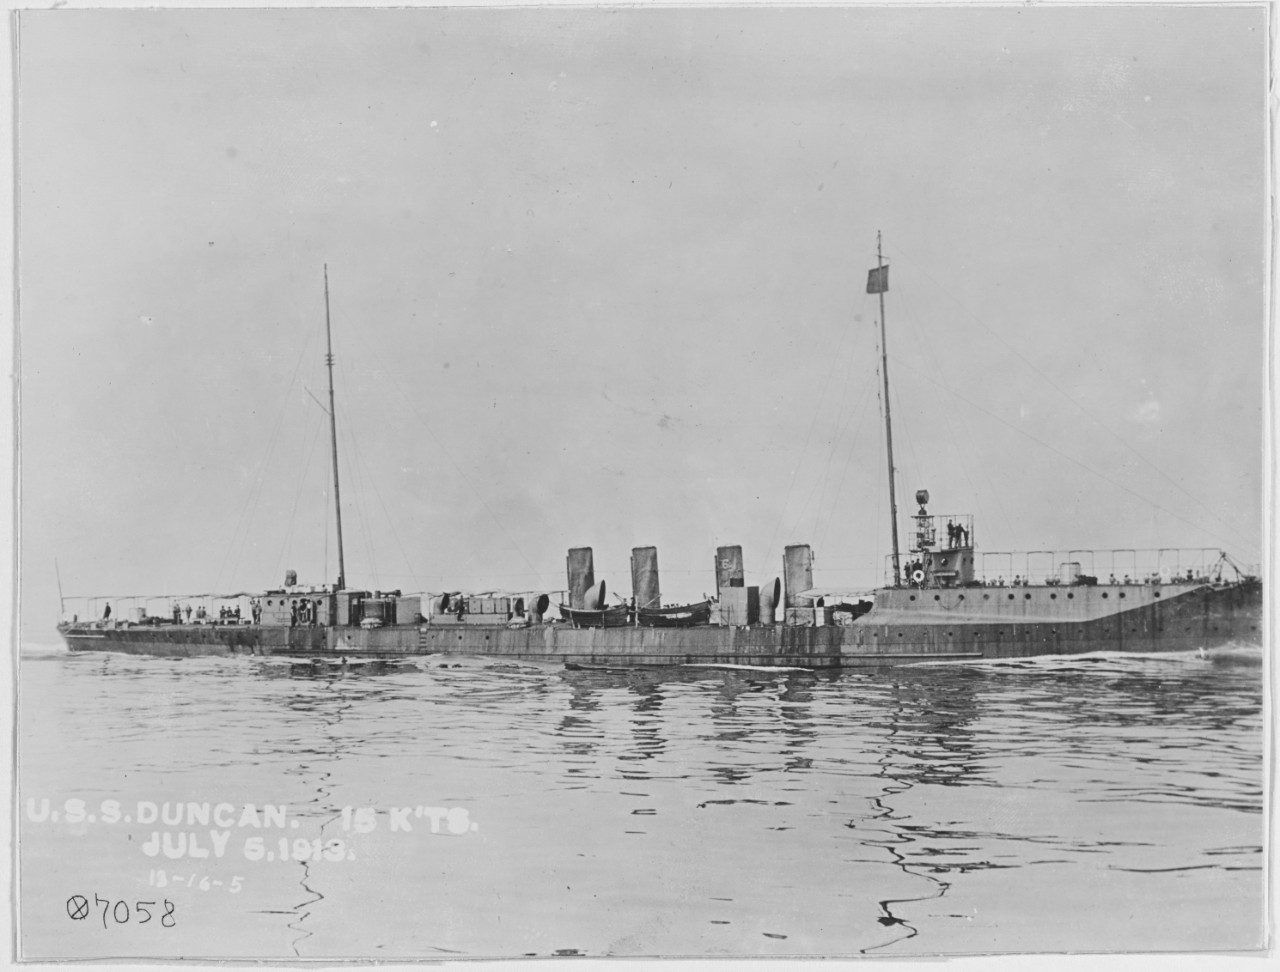 USS DUNCAN (DD-46)